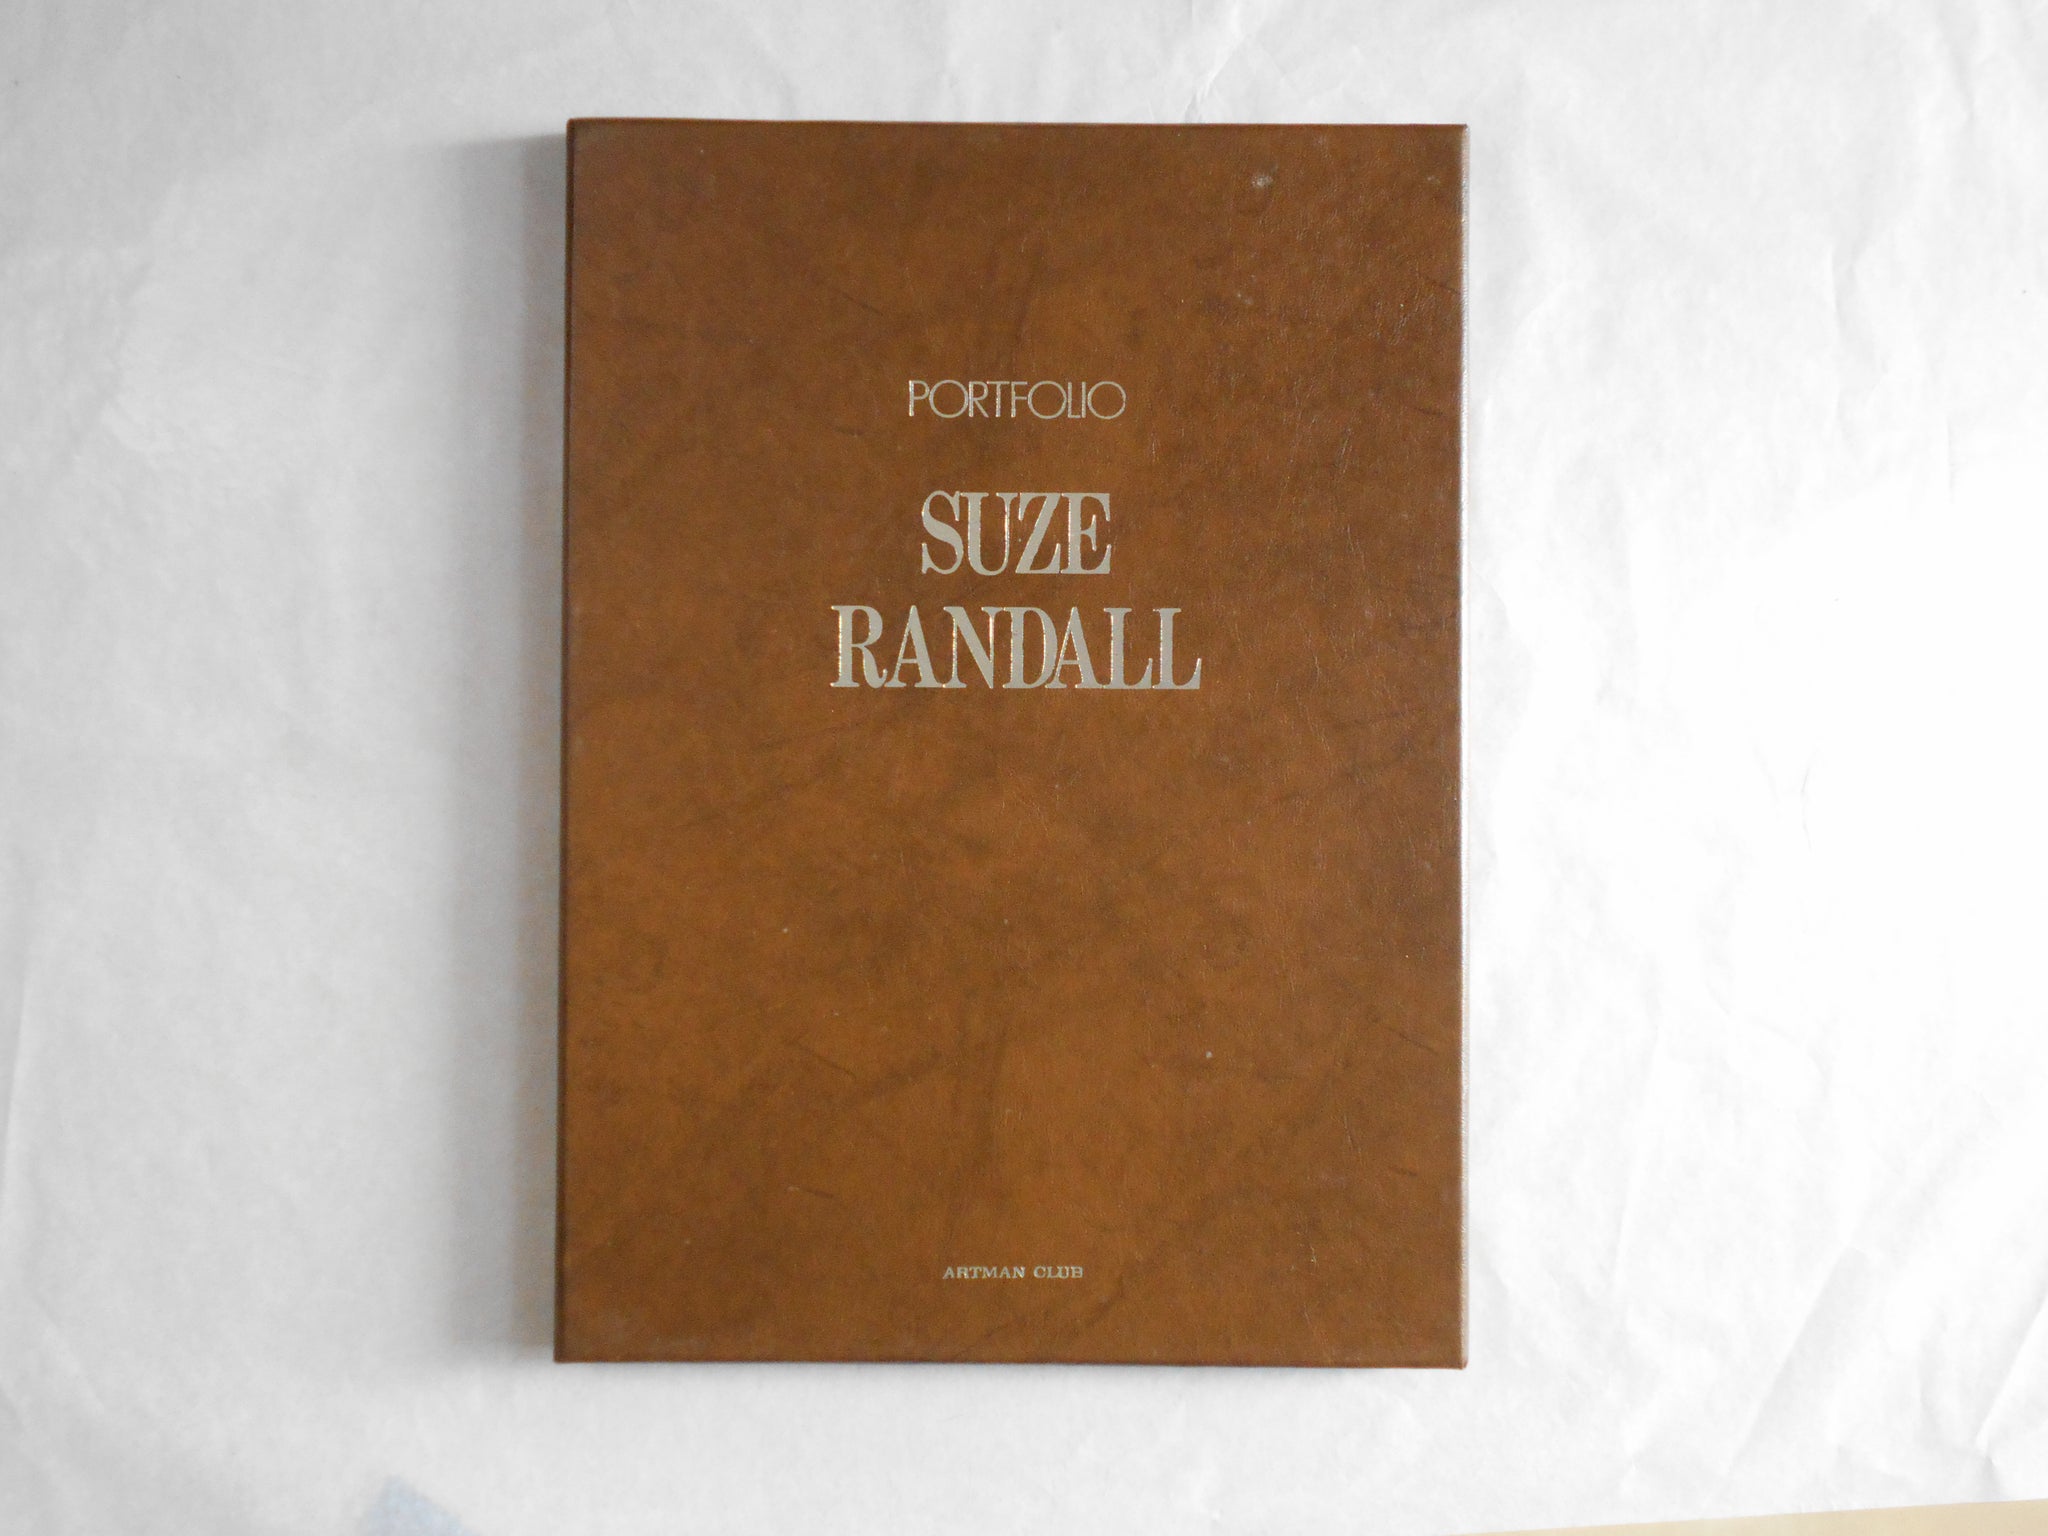 Portfolio | Suze Randall | Artman Club 1992